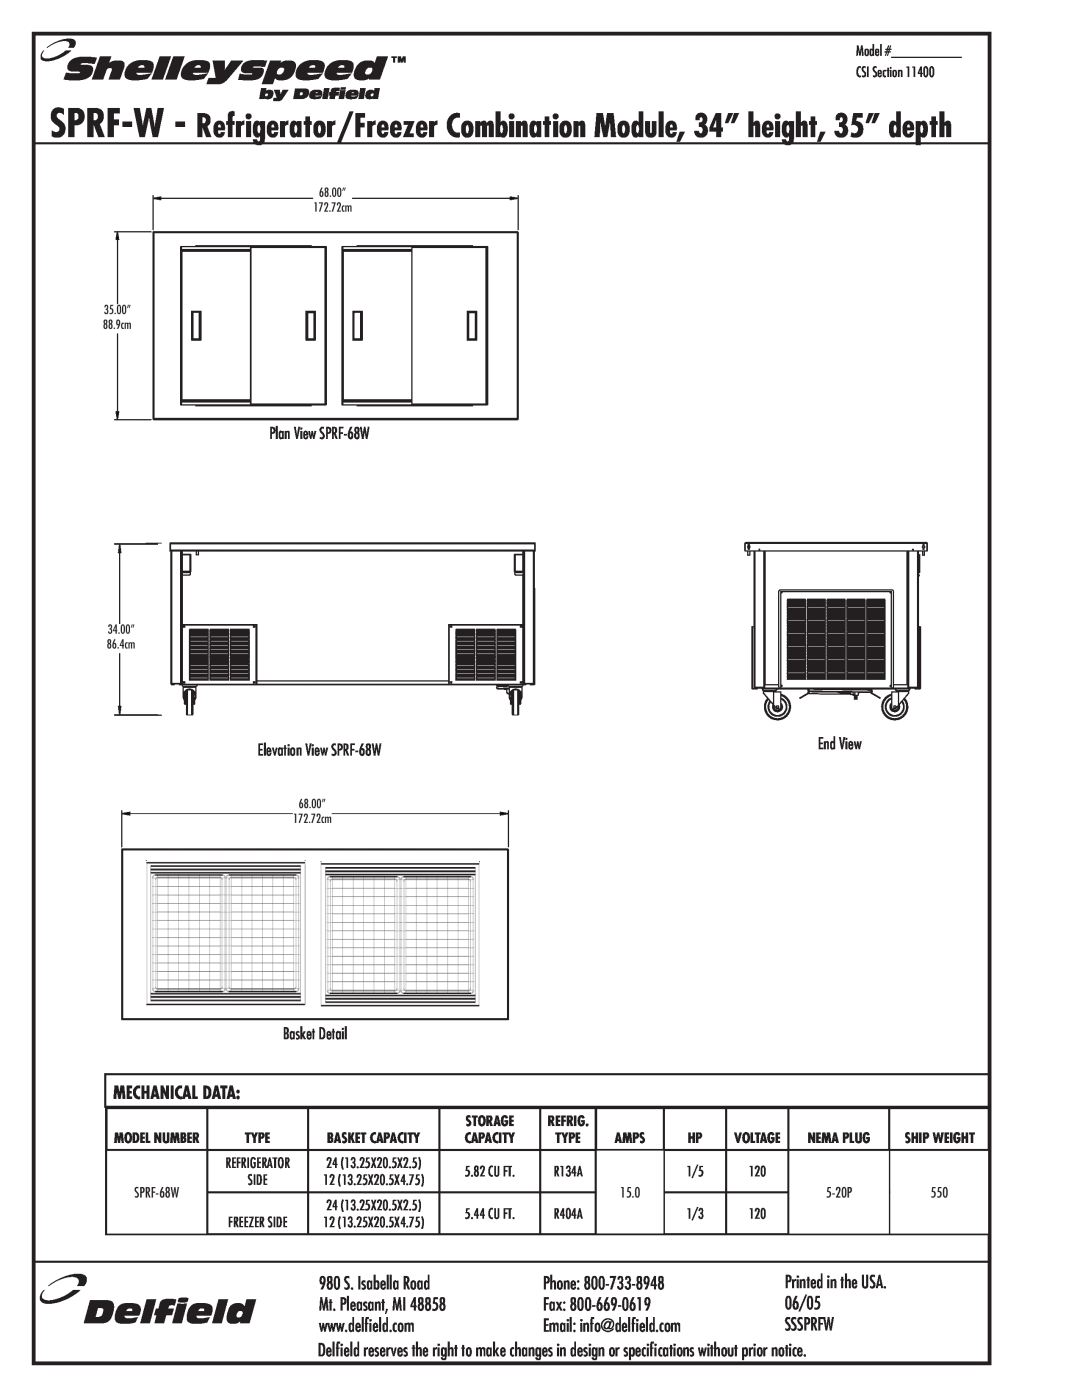 Delfield Mechanical Data, 06/05, Sssprfw, Plan View SPRF-68W, Basket Detail, Storage, Basket Capacity, Phone, Fax, Amps 